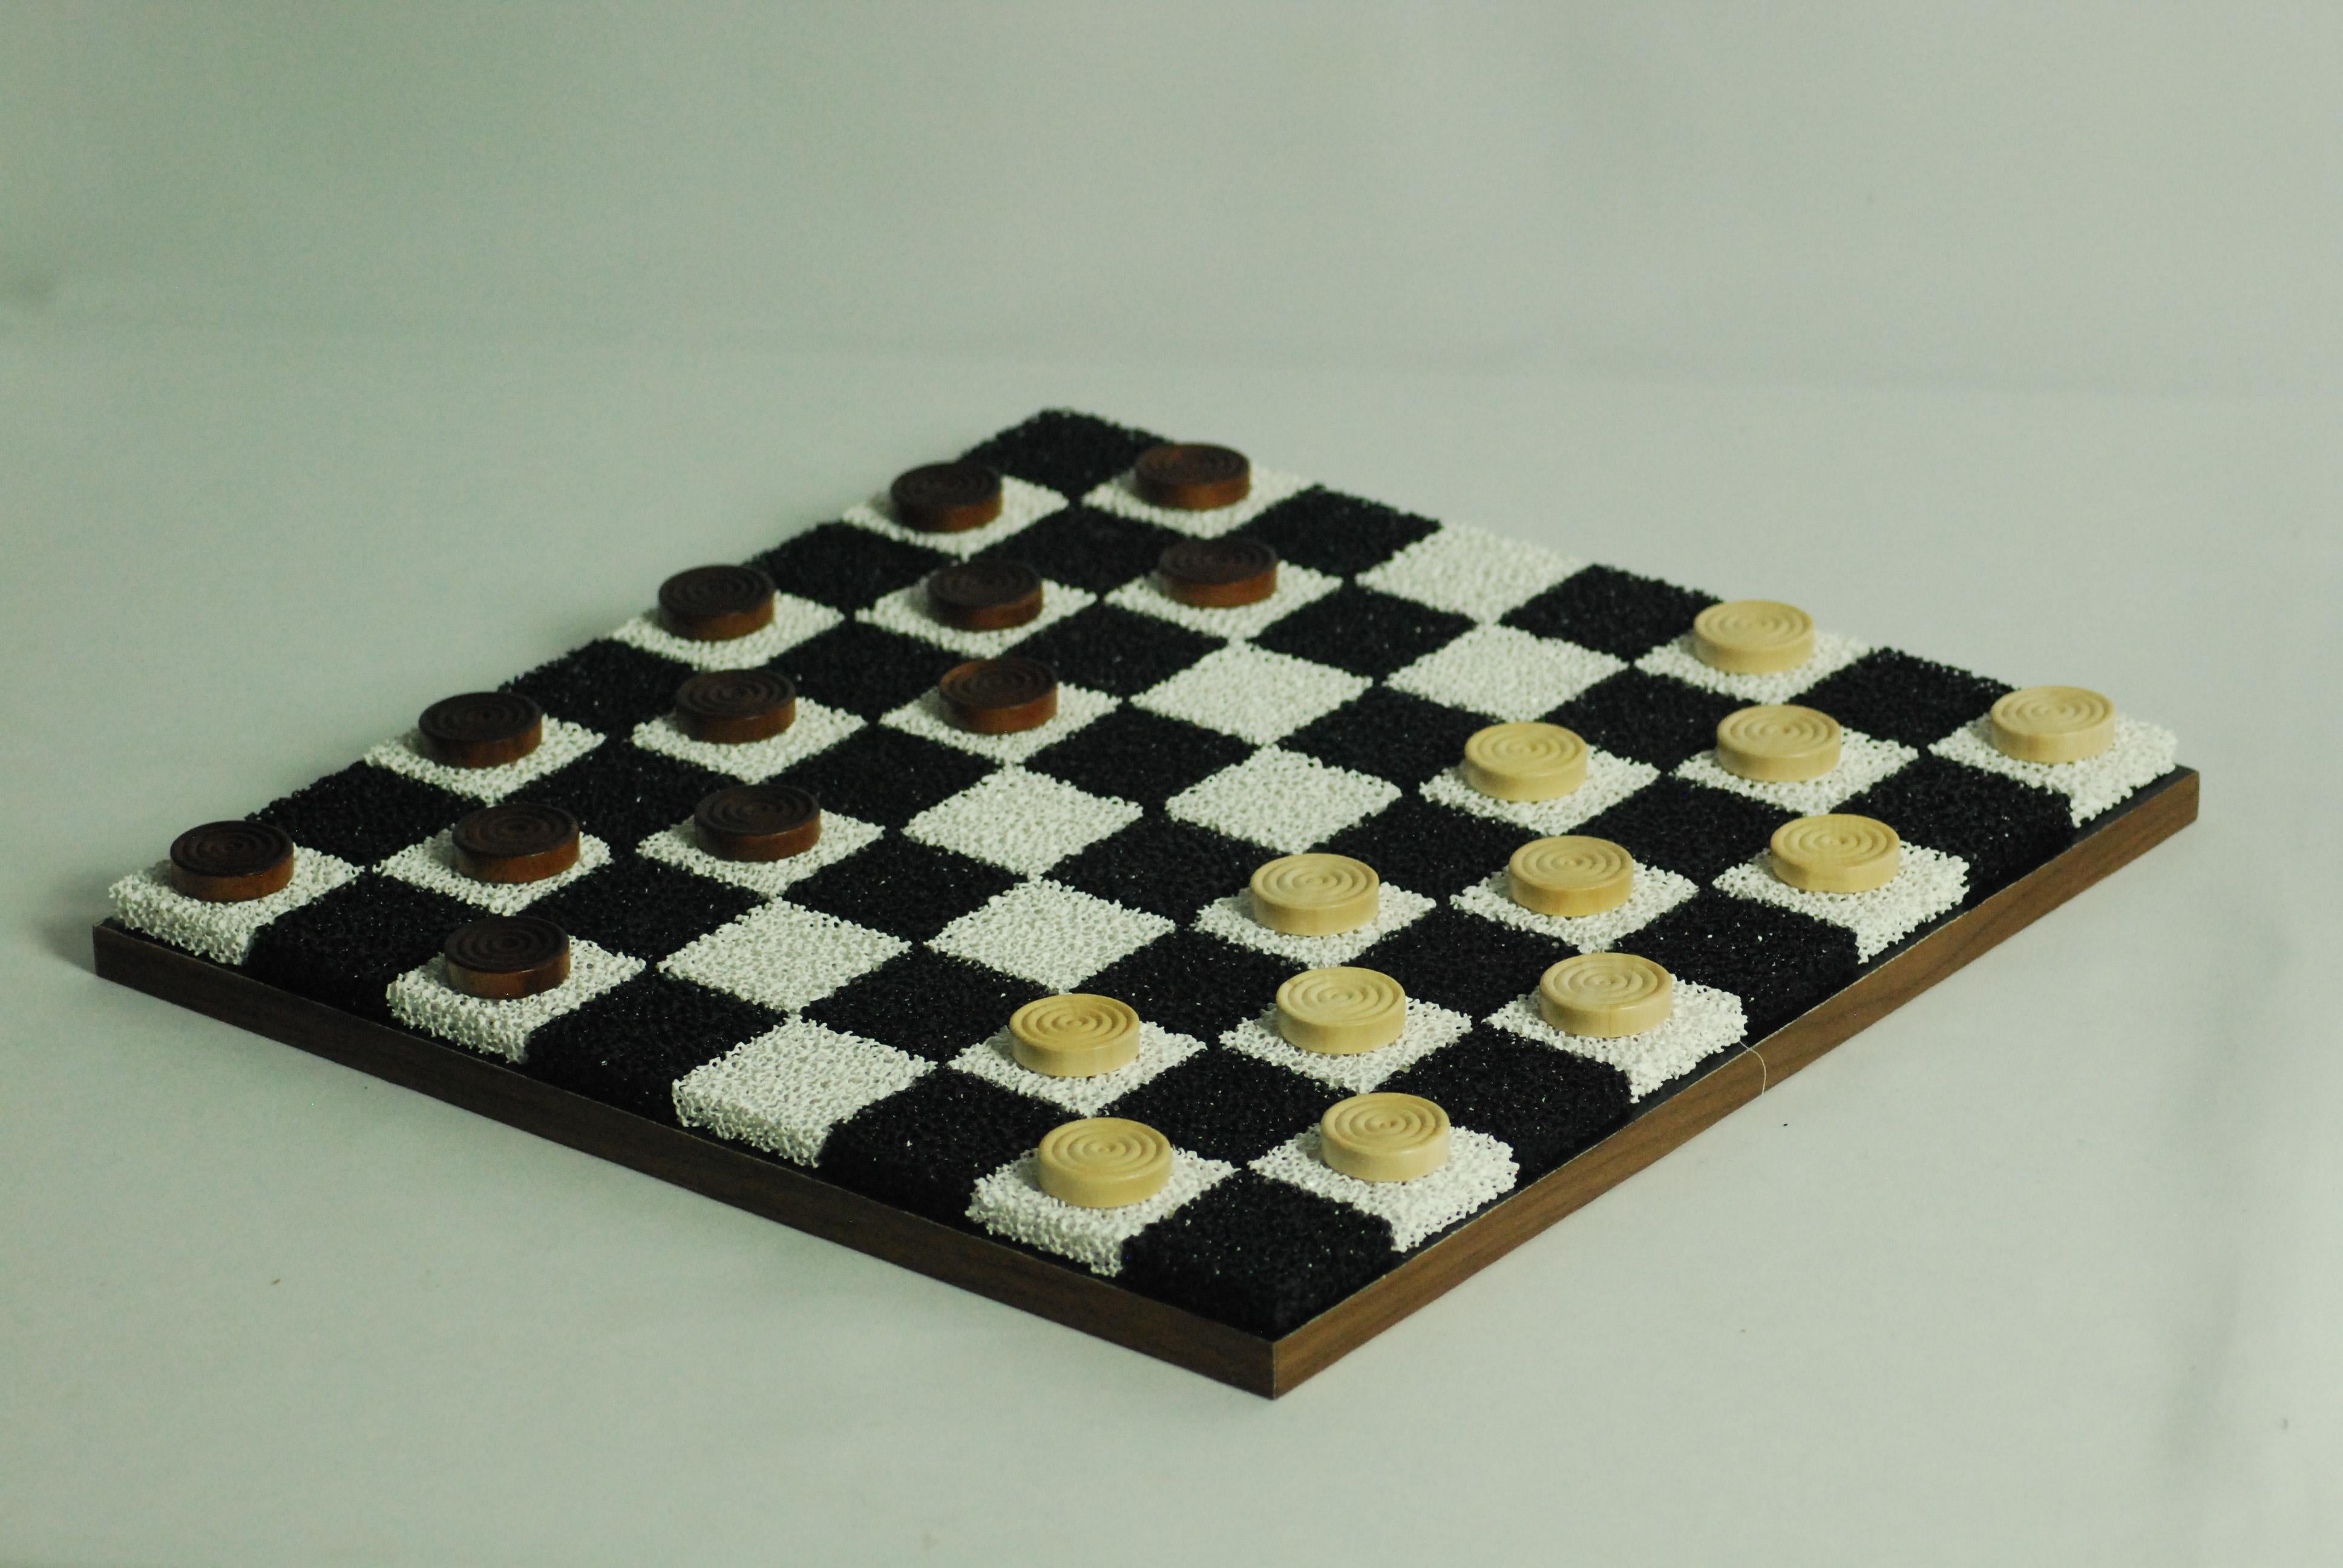 Black + White Porous Ceramic Chess + Checkers Board, Wooden Pieces, Walnut Edge For Sale 7